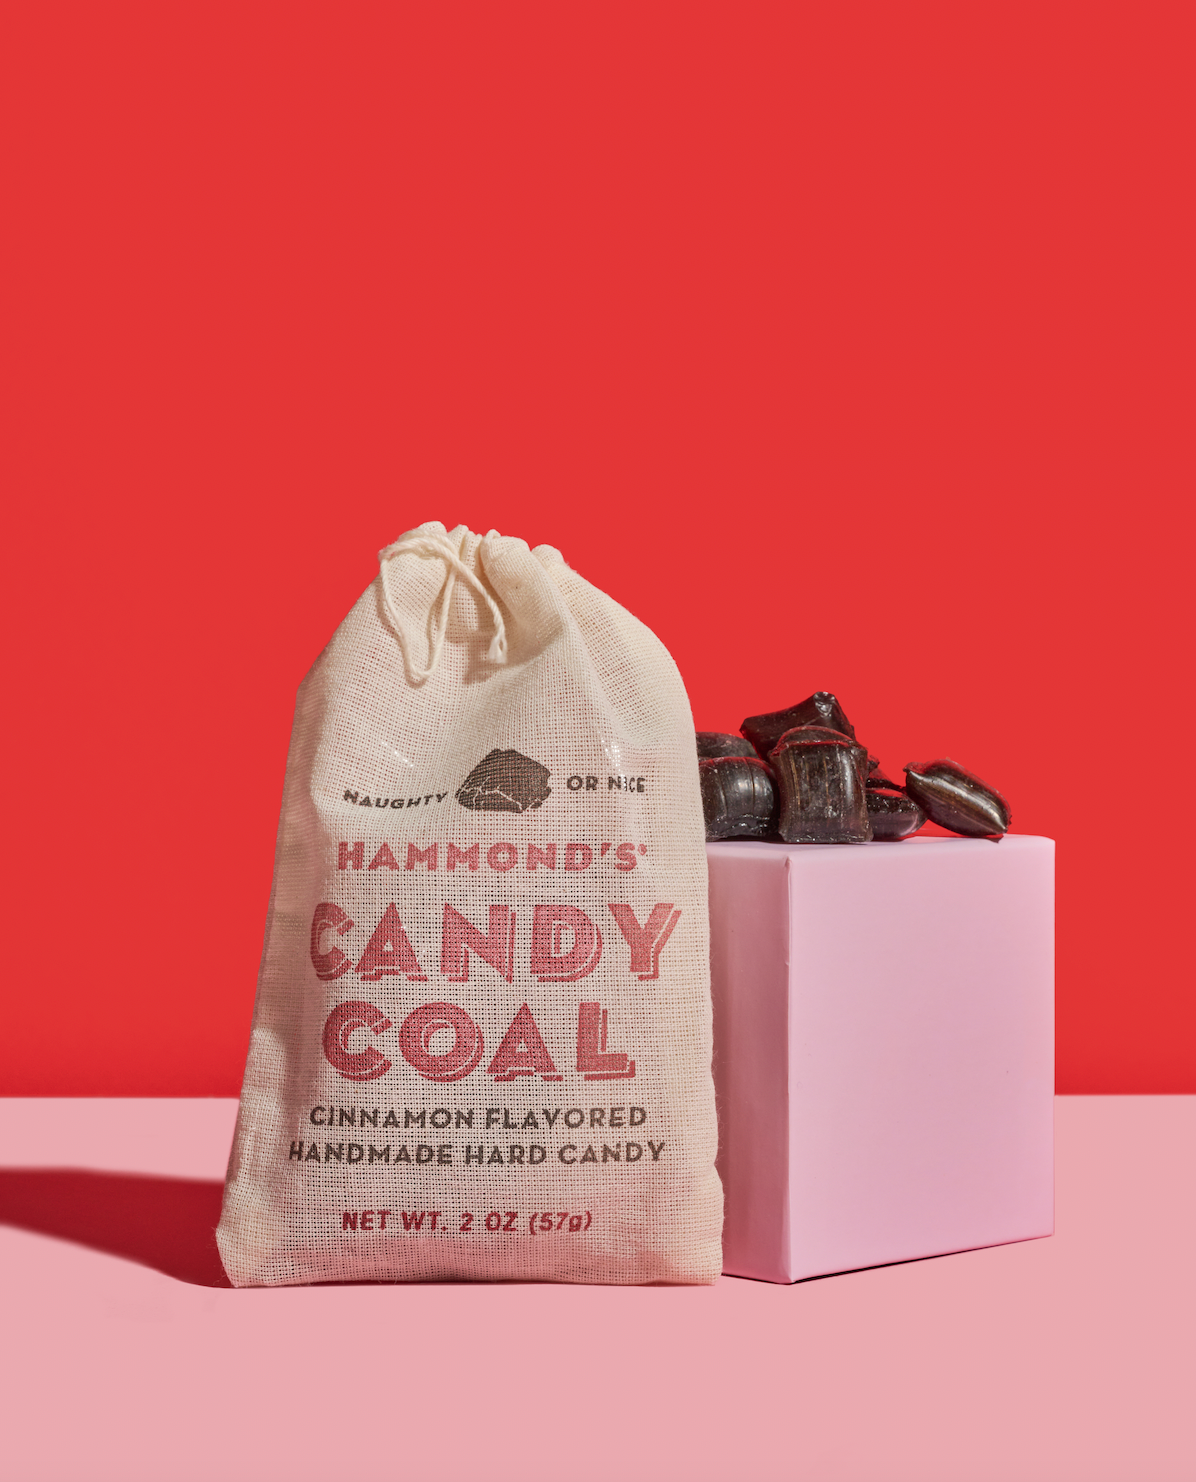 Hammond's Cinnamon Candy Coal